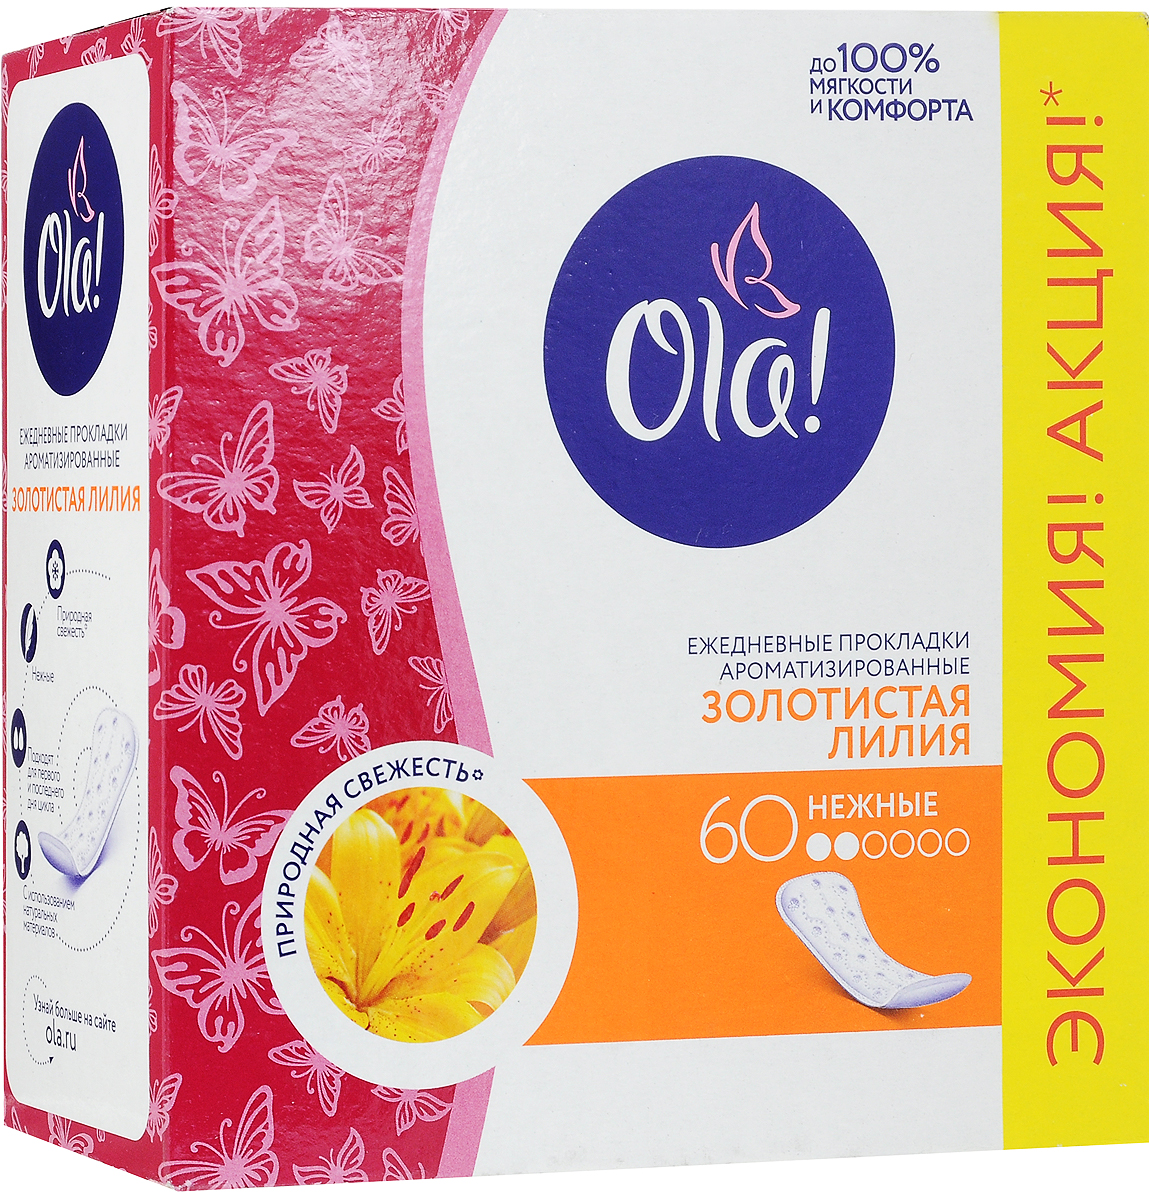 Ola! Daily DEO (Золотистая лилия) Прокладки, 60 шт